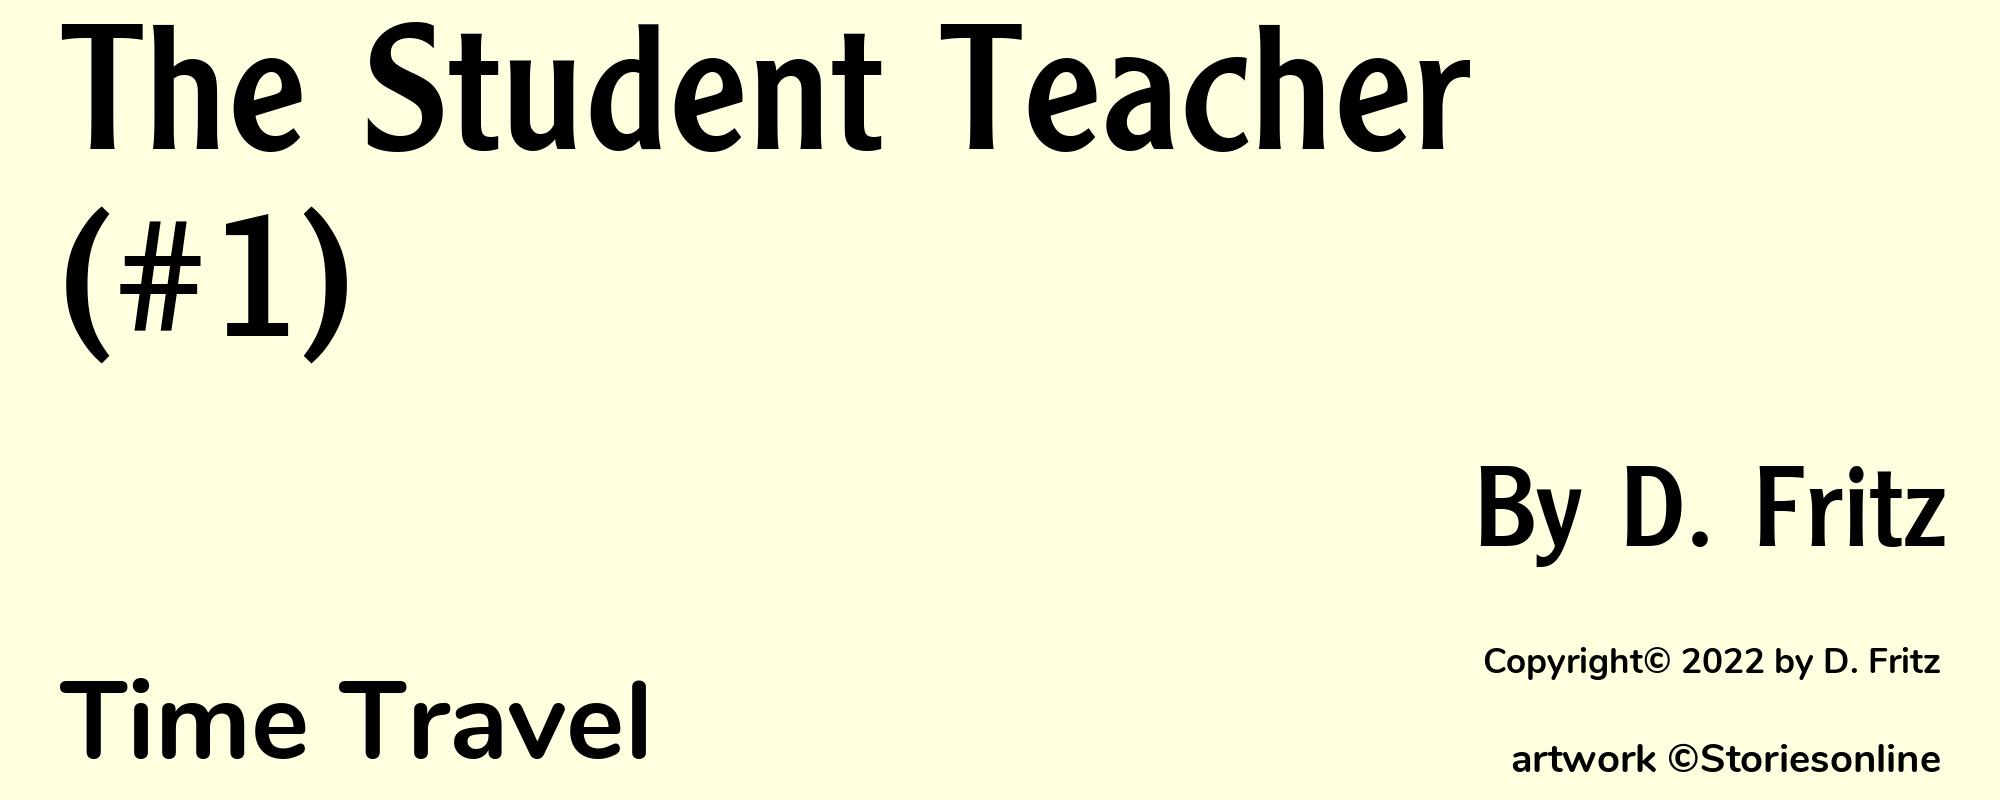 The Student Teacher (#1) - Cover